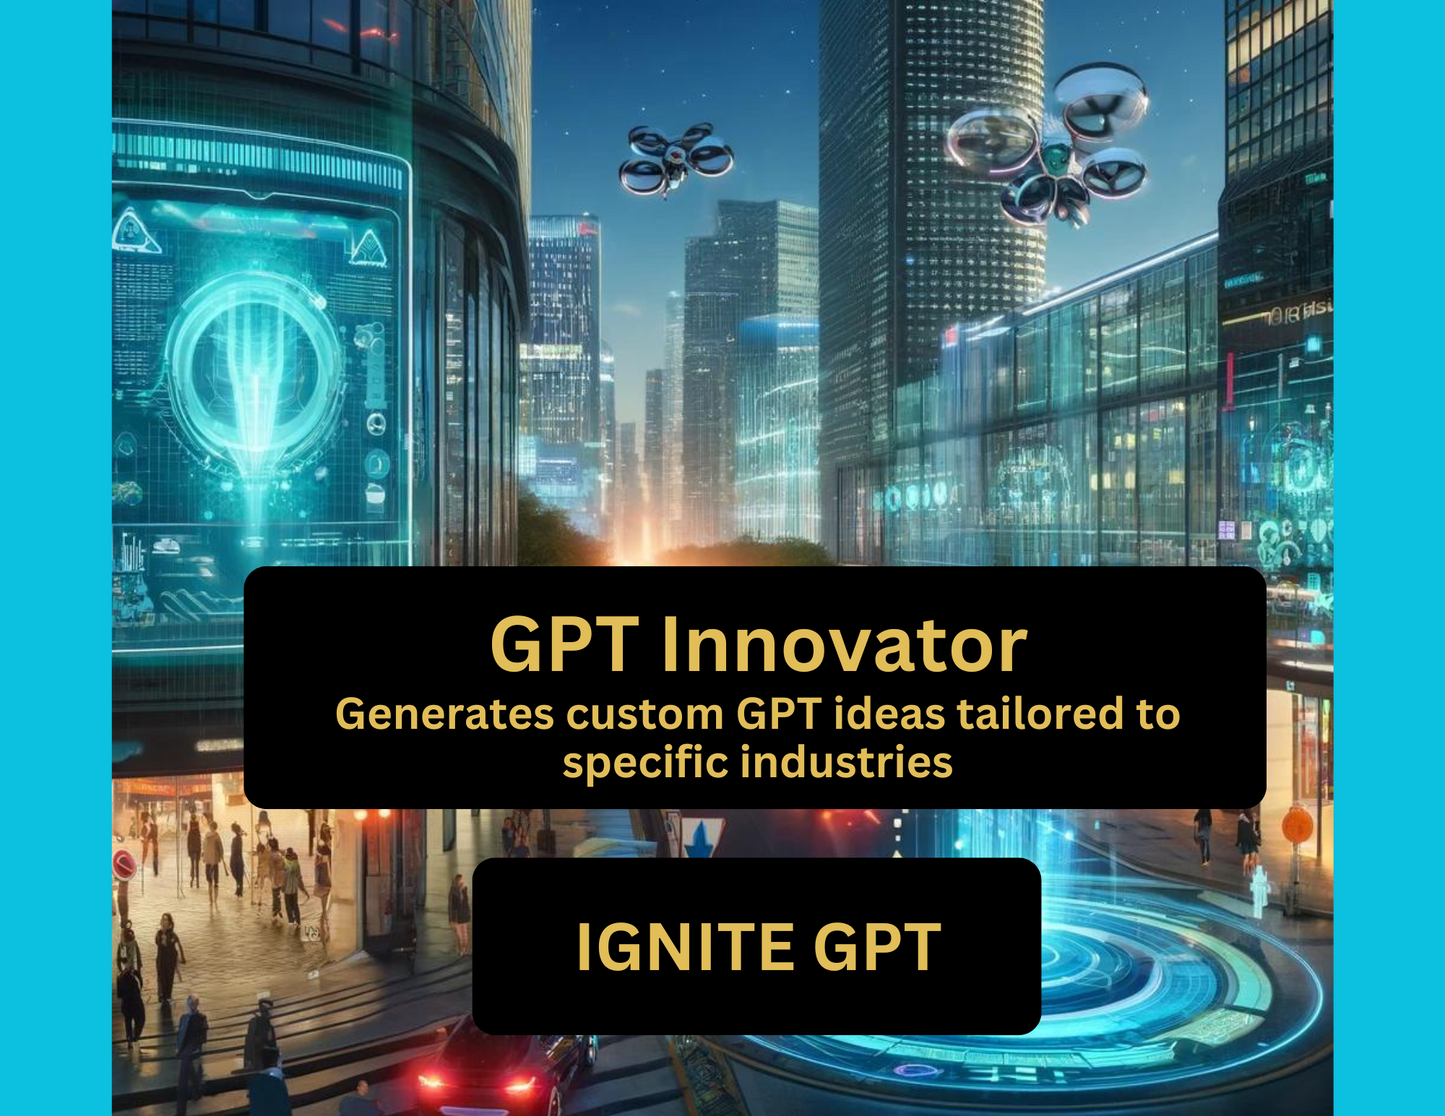 The GPT Innovator